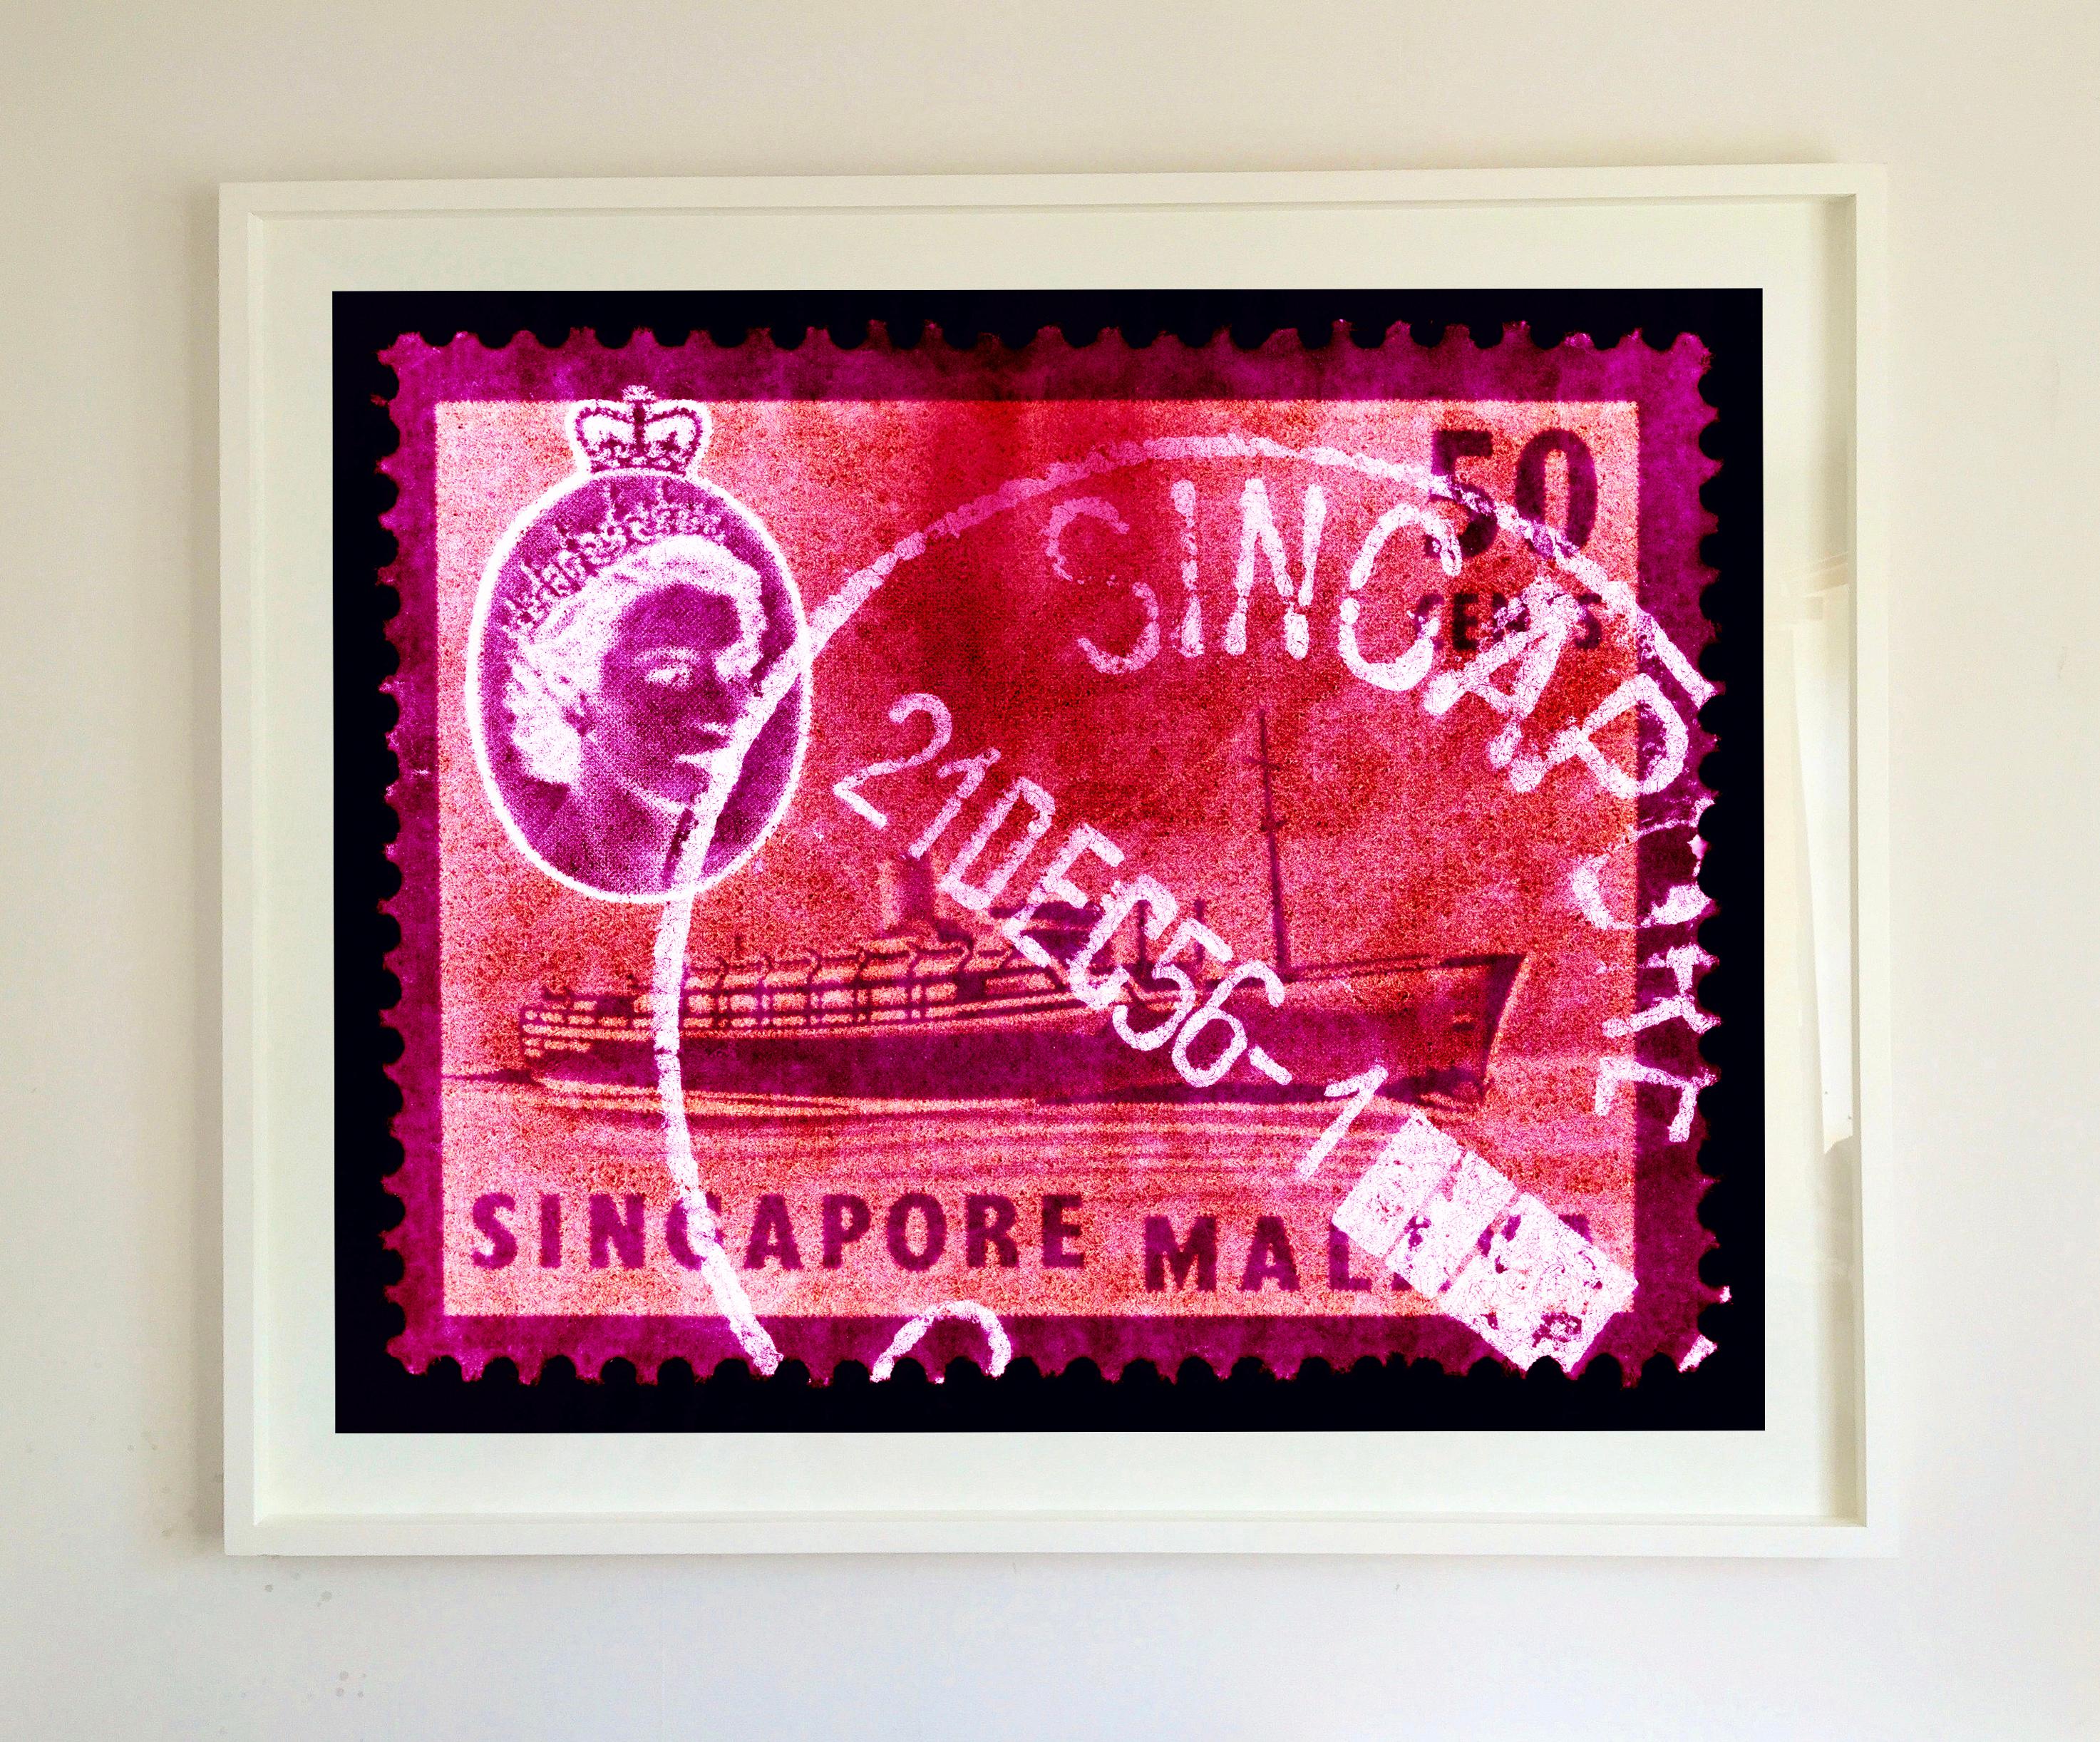 Singapur Singapore Stempel-Kollektion, 50c QEII Dampfschiff in Rosa - Pop Art-Farbe Foto (Pink), Color Photograph, von Heidler & Heeps